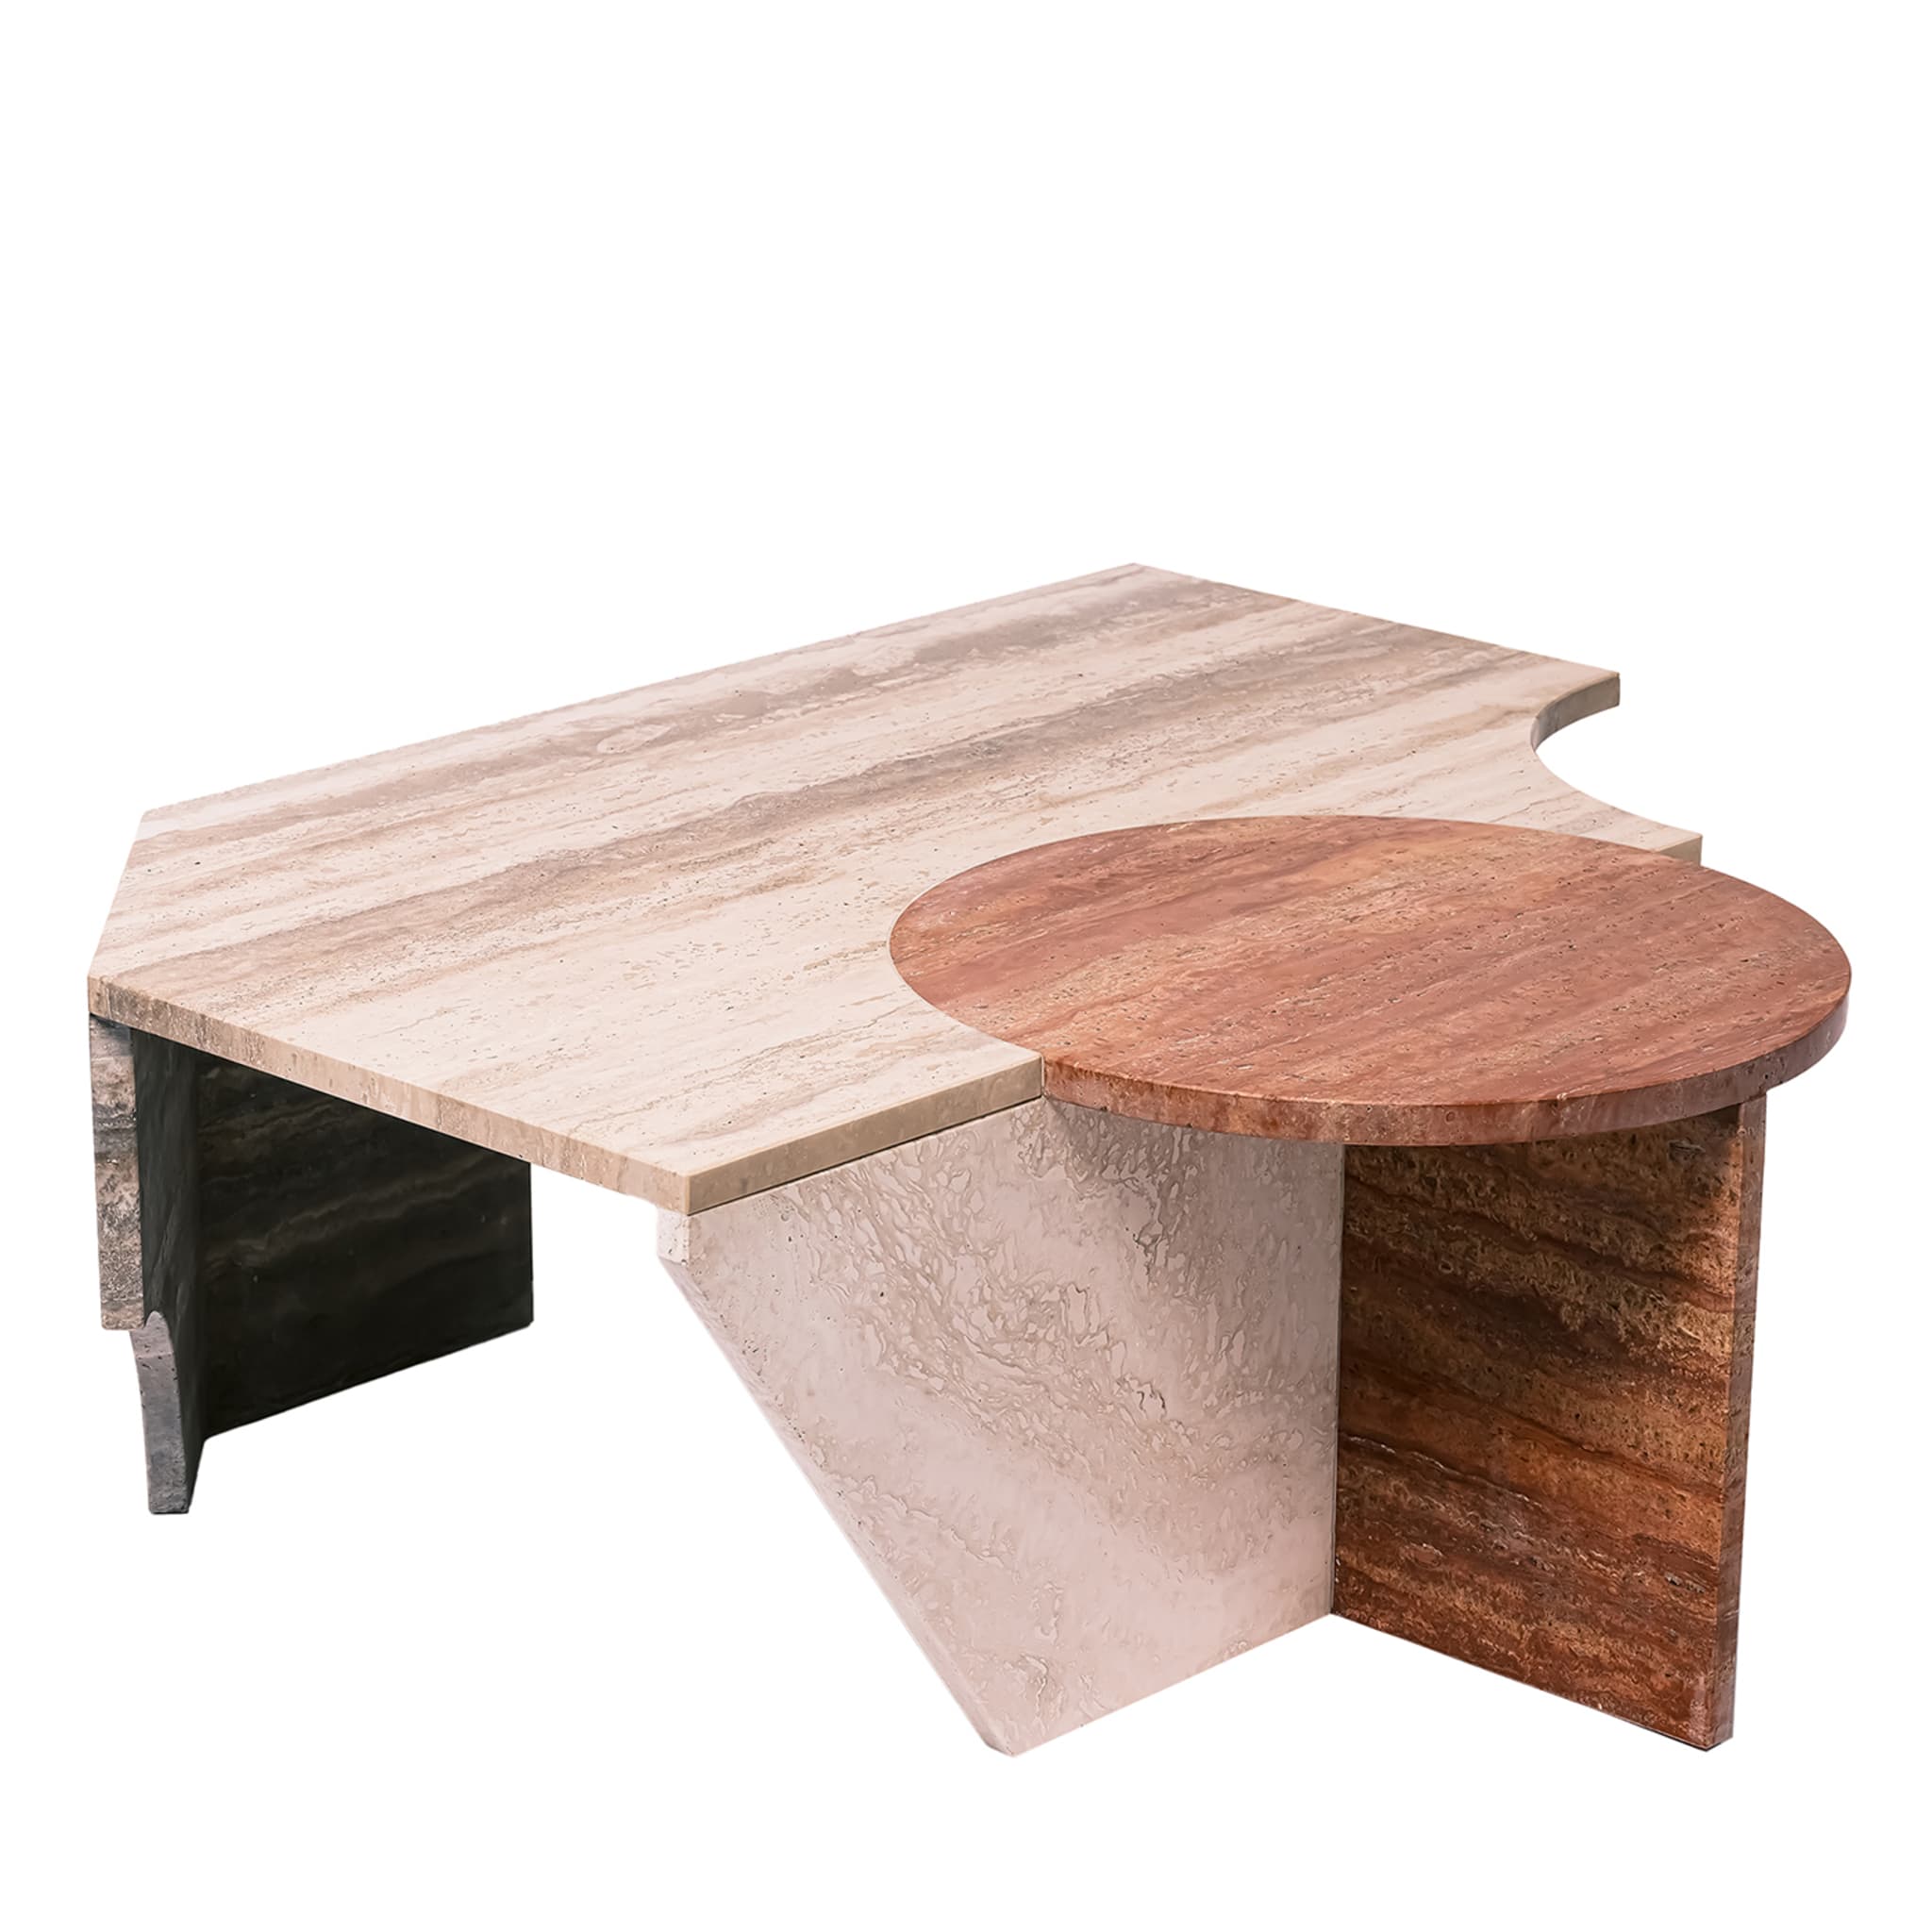 Ritagli A Asymmetrical Coffee Table #2 by Studiopepe Design - Main view